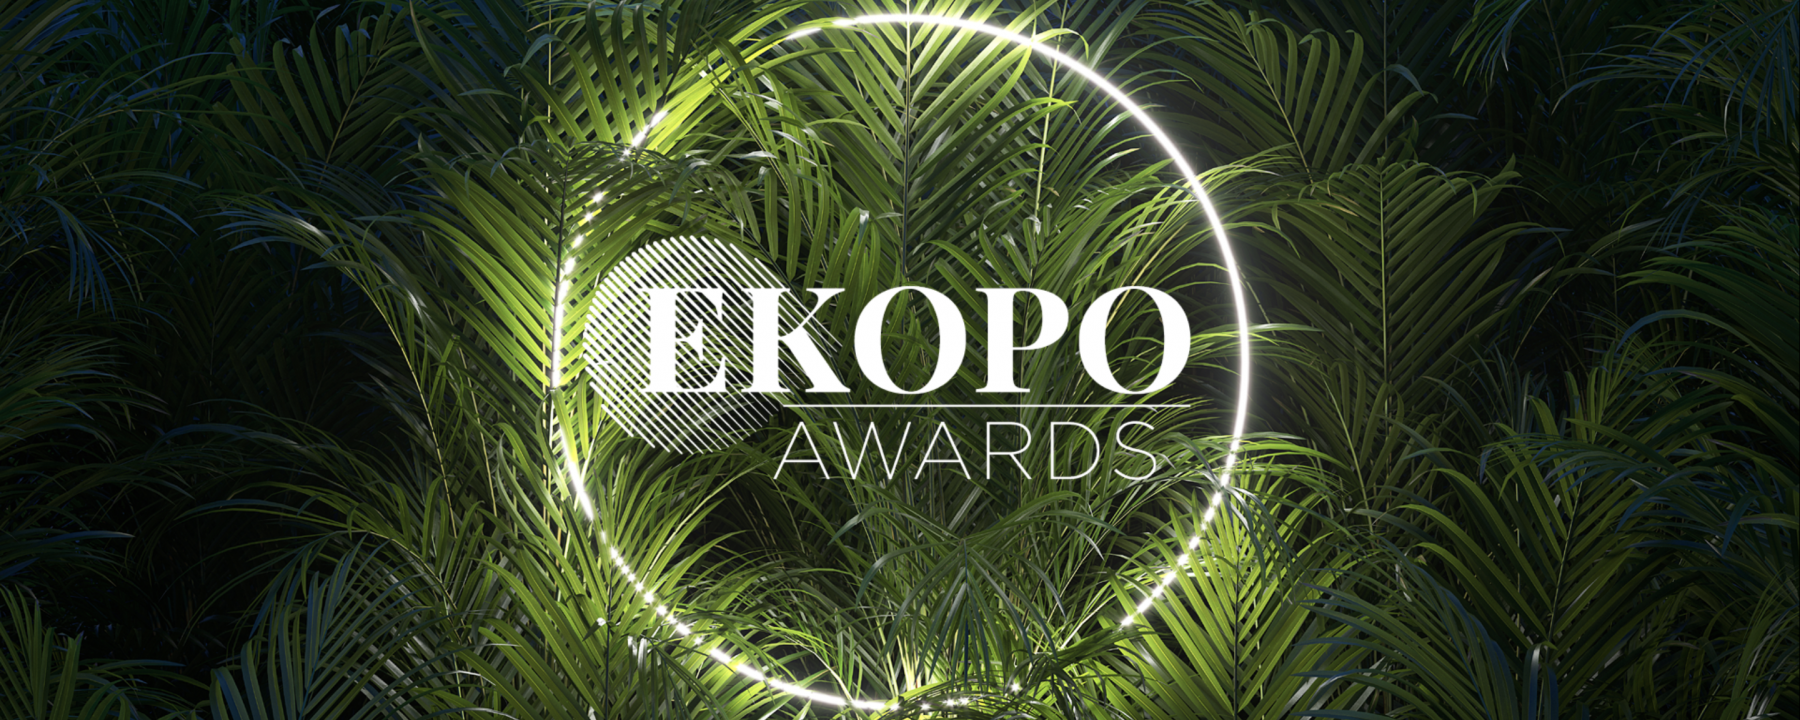 Ekopo Awards 2021